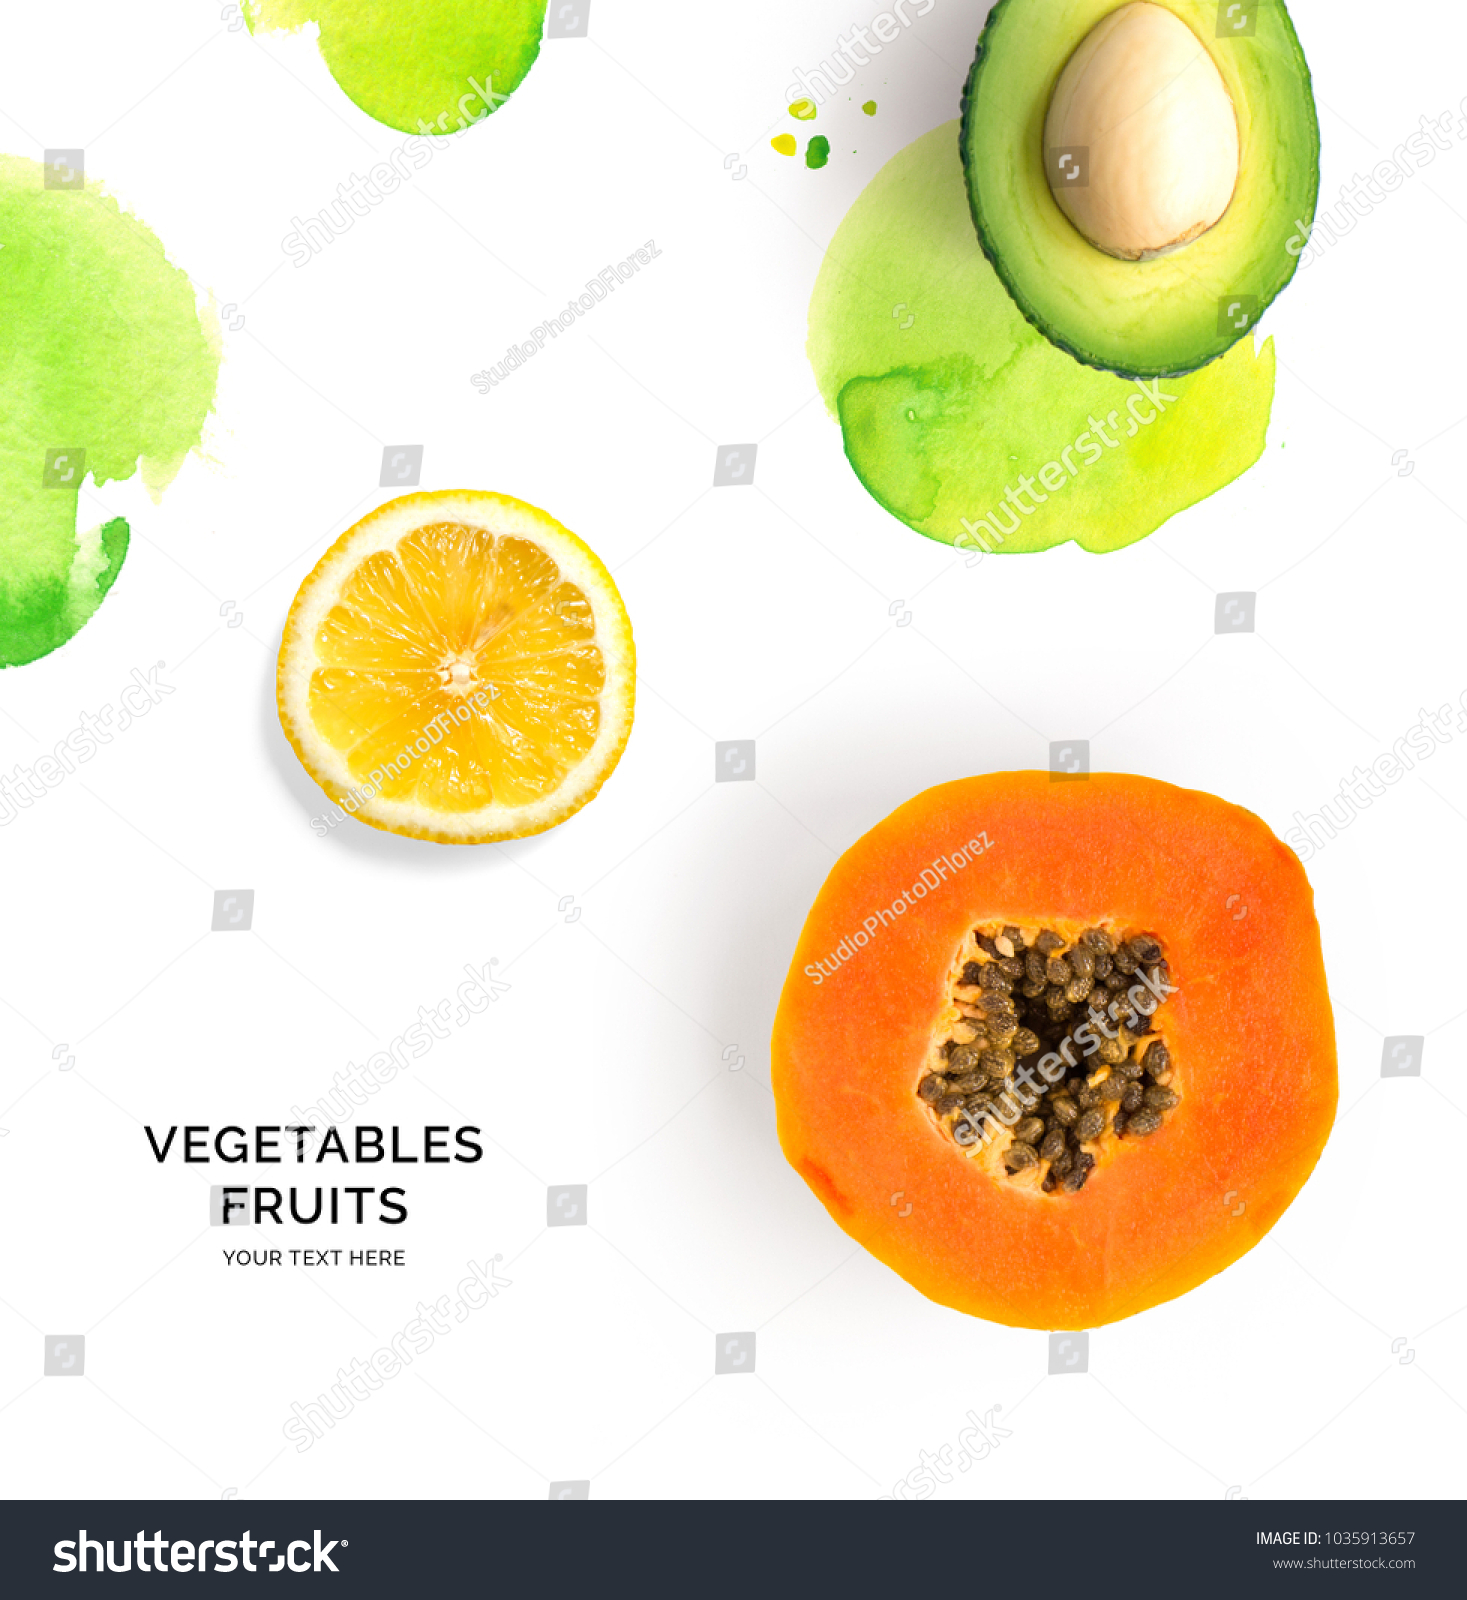 Creative layout made of papaya, avocado and lemon on the white background. Flat lay. Food concept. #1035913657